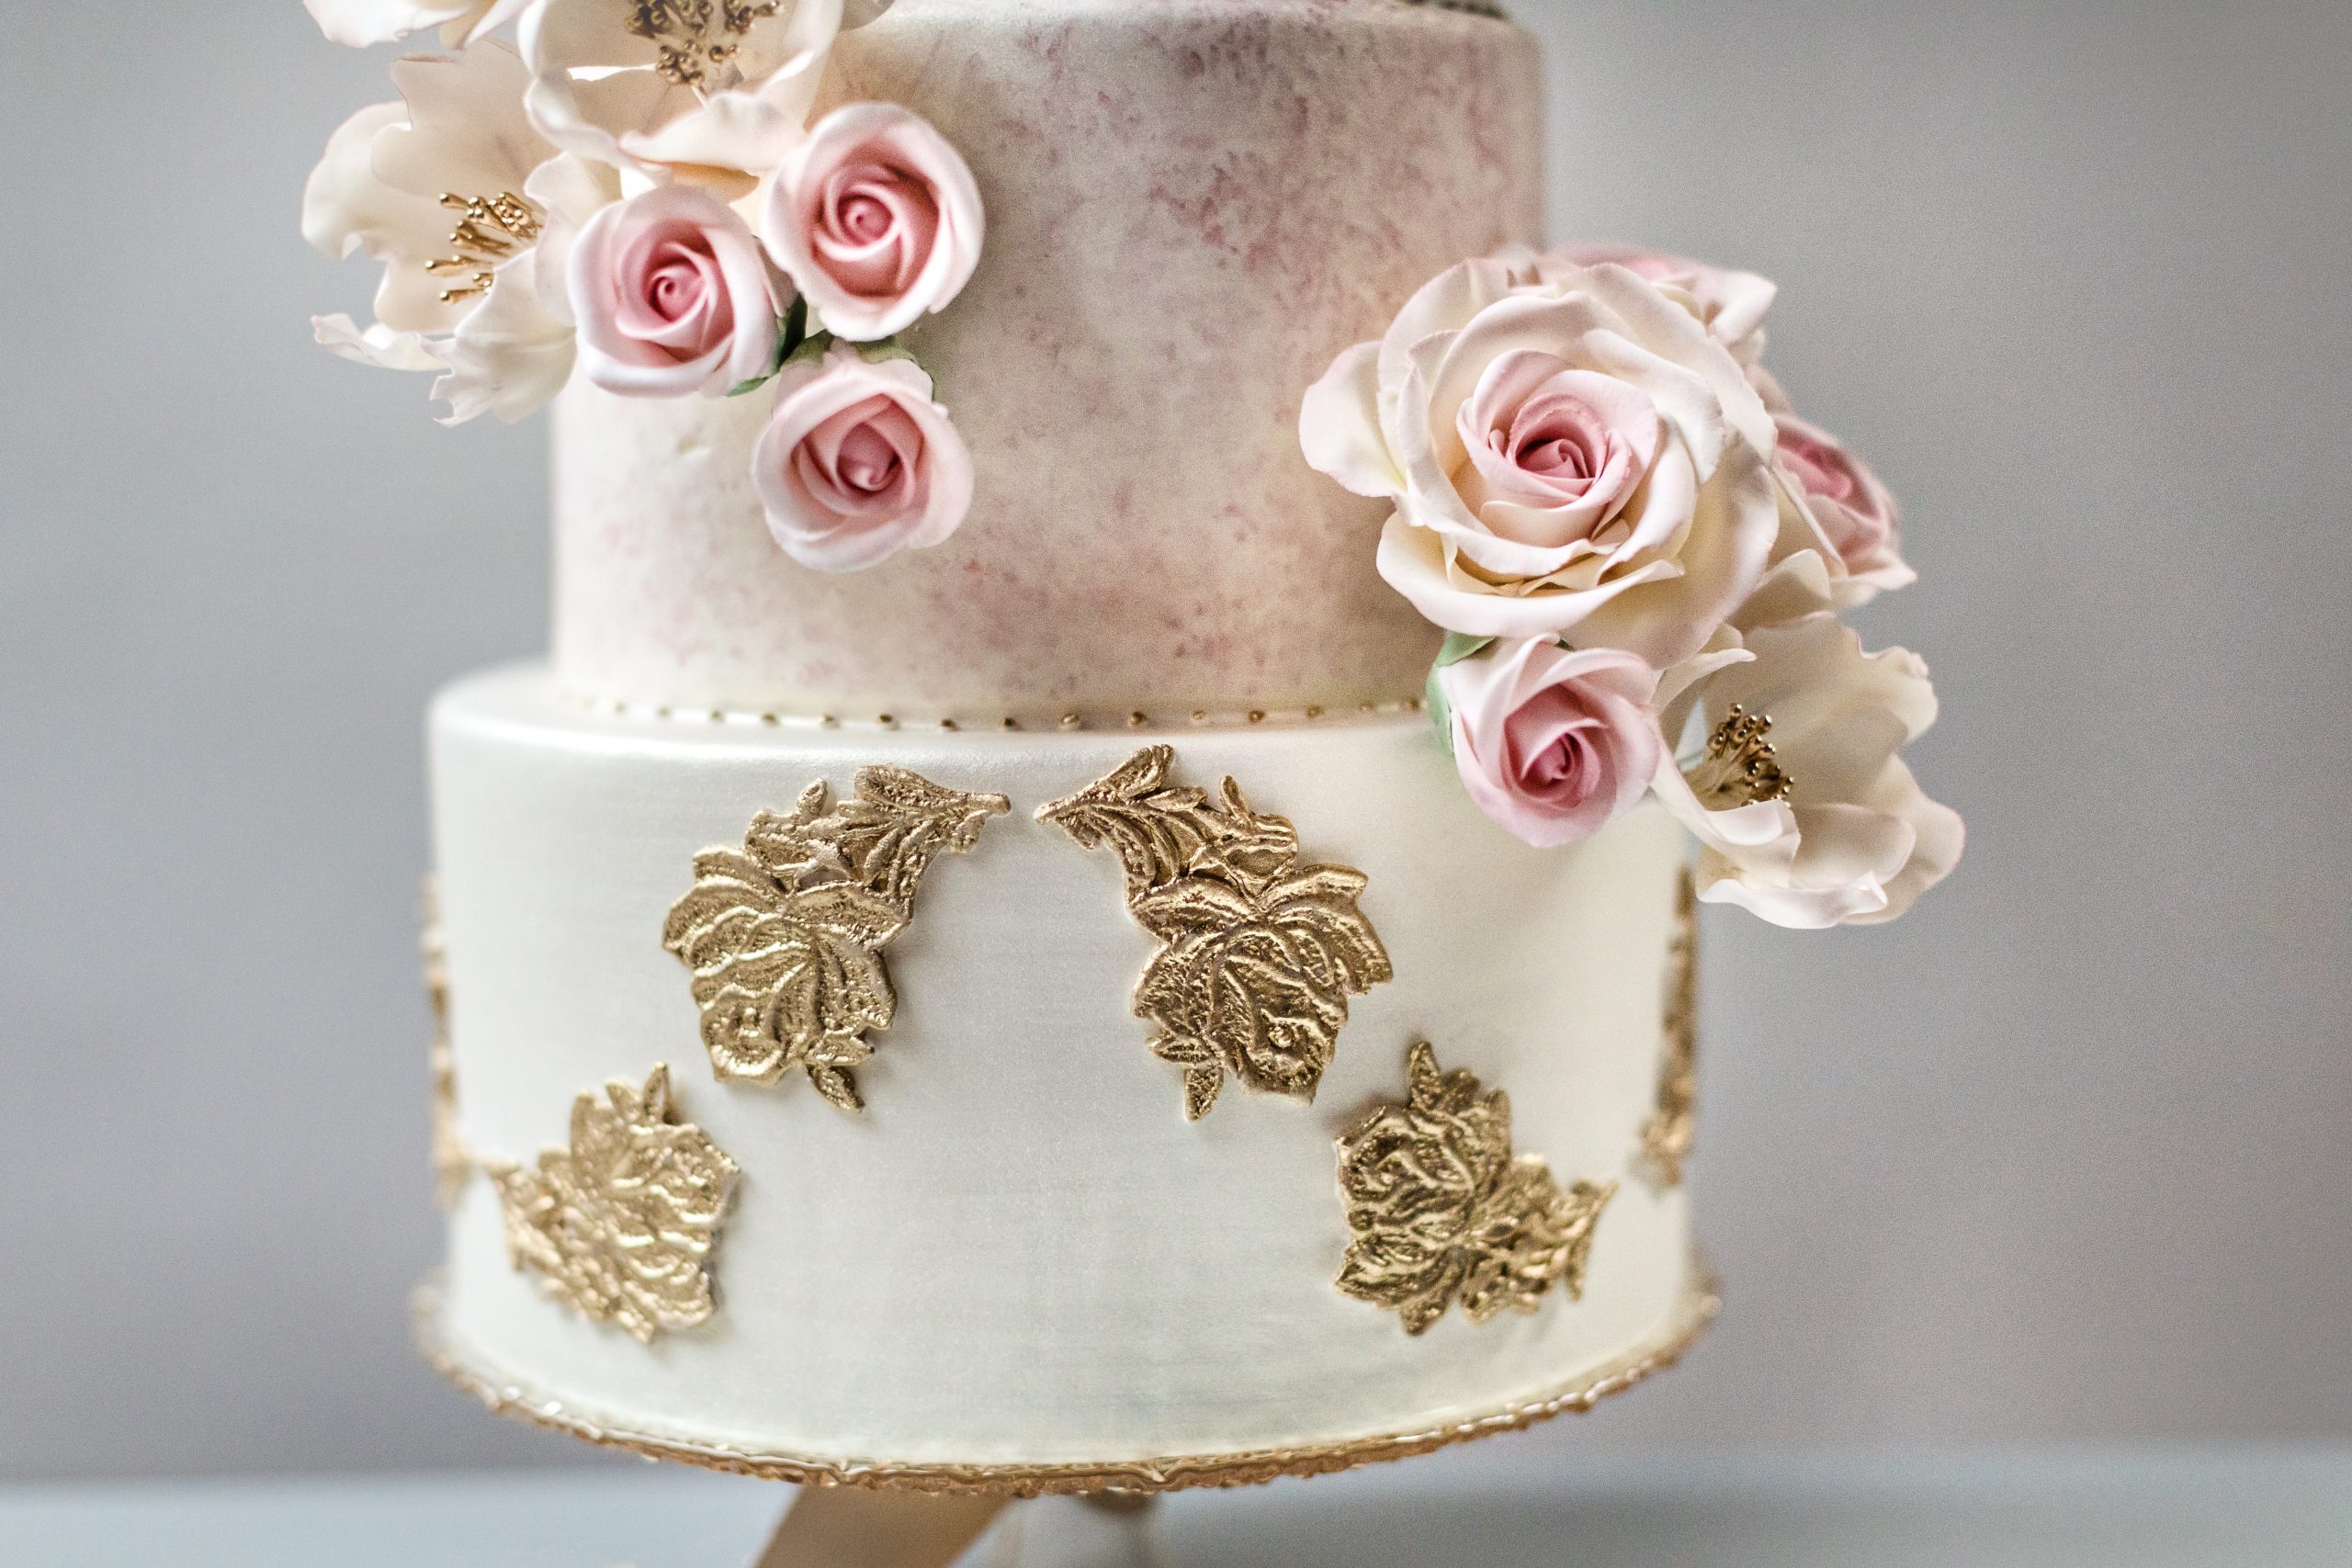 Stunning vintage, romantic, pink & gold custom wedding cake detail with sugar flowers. Luxury designer wedding cakes by Ana Parzych